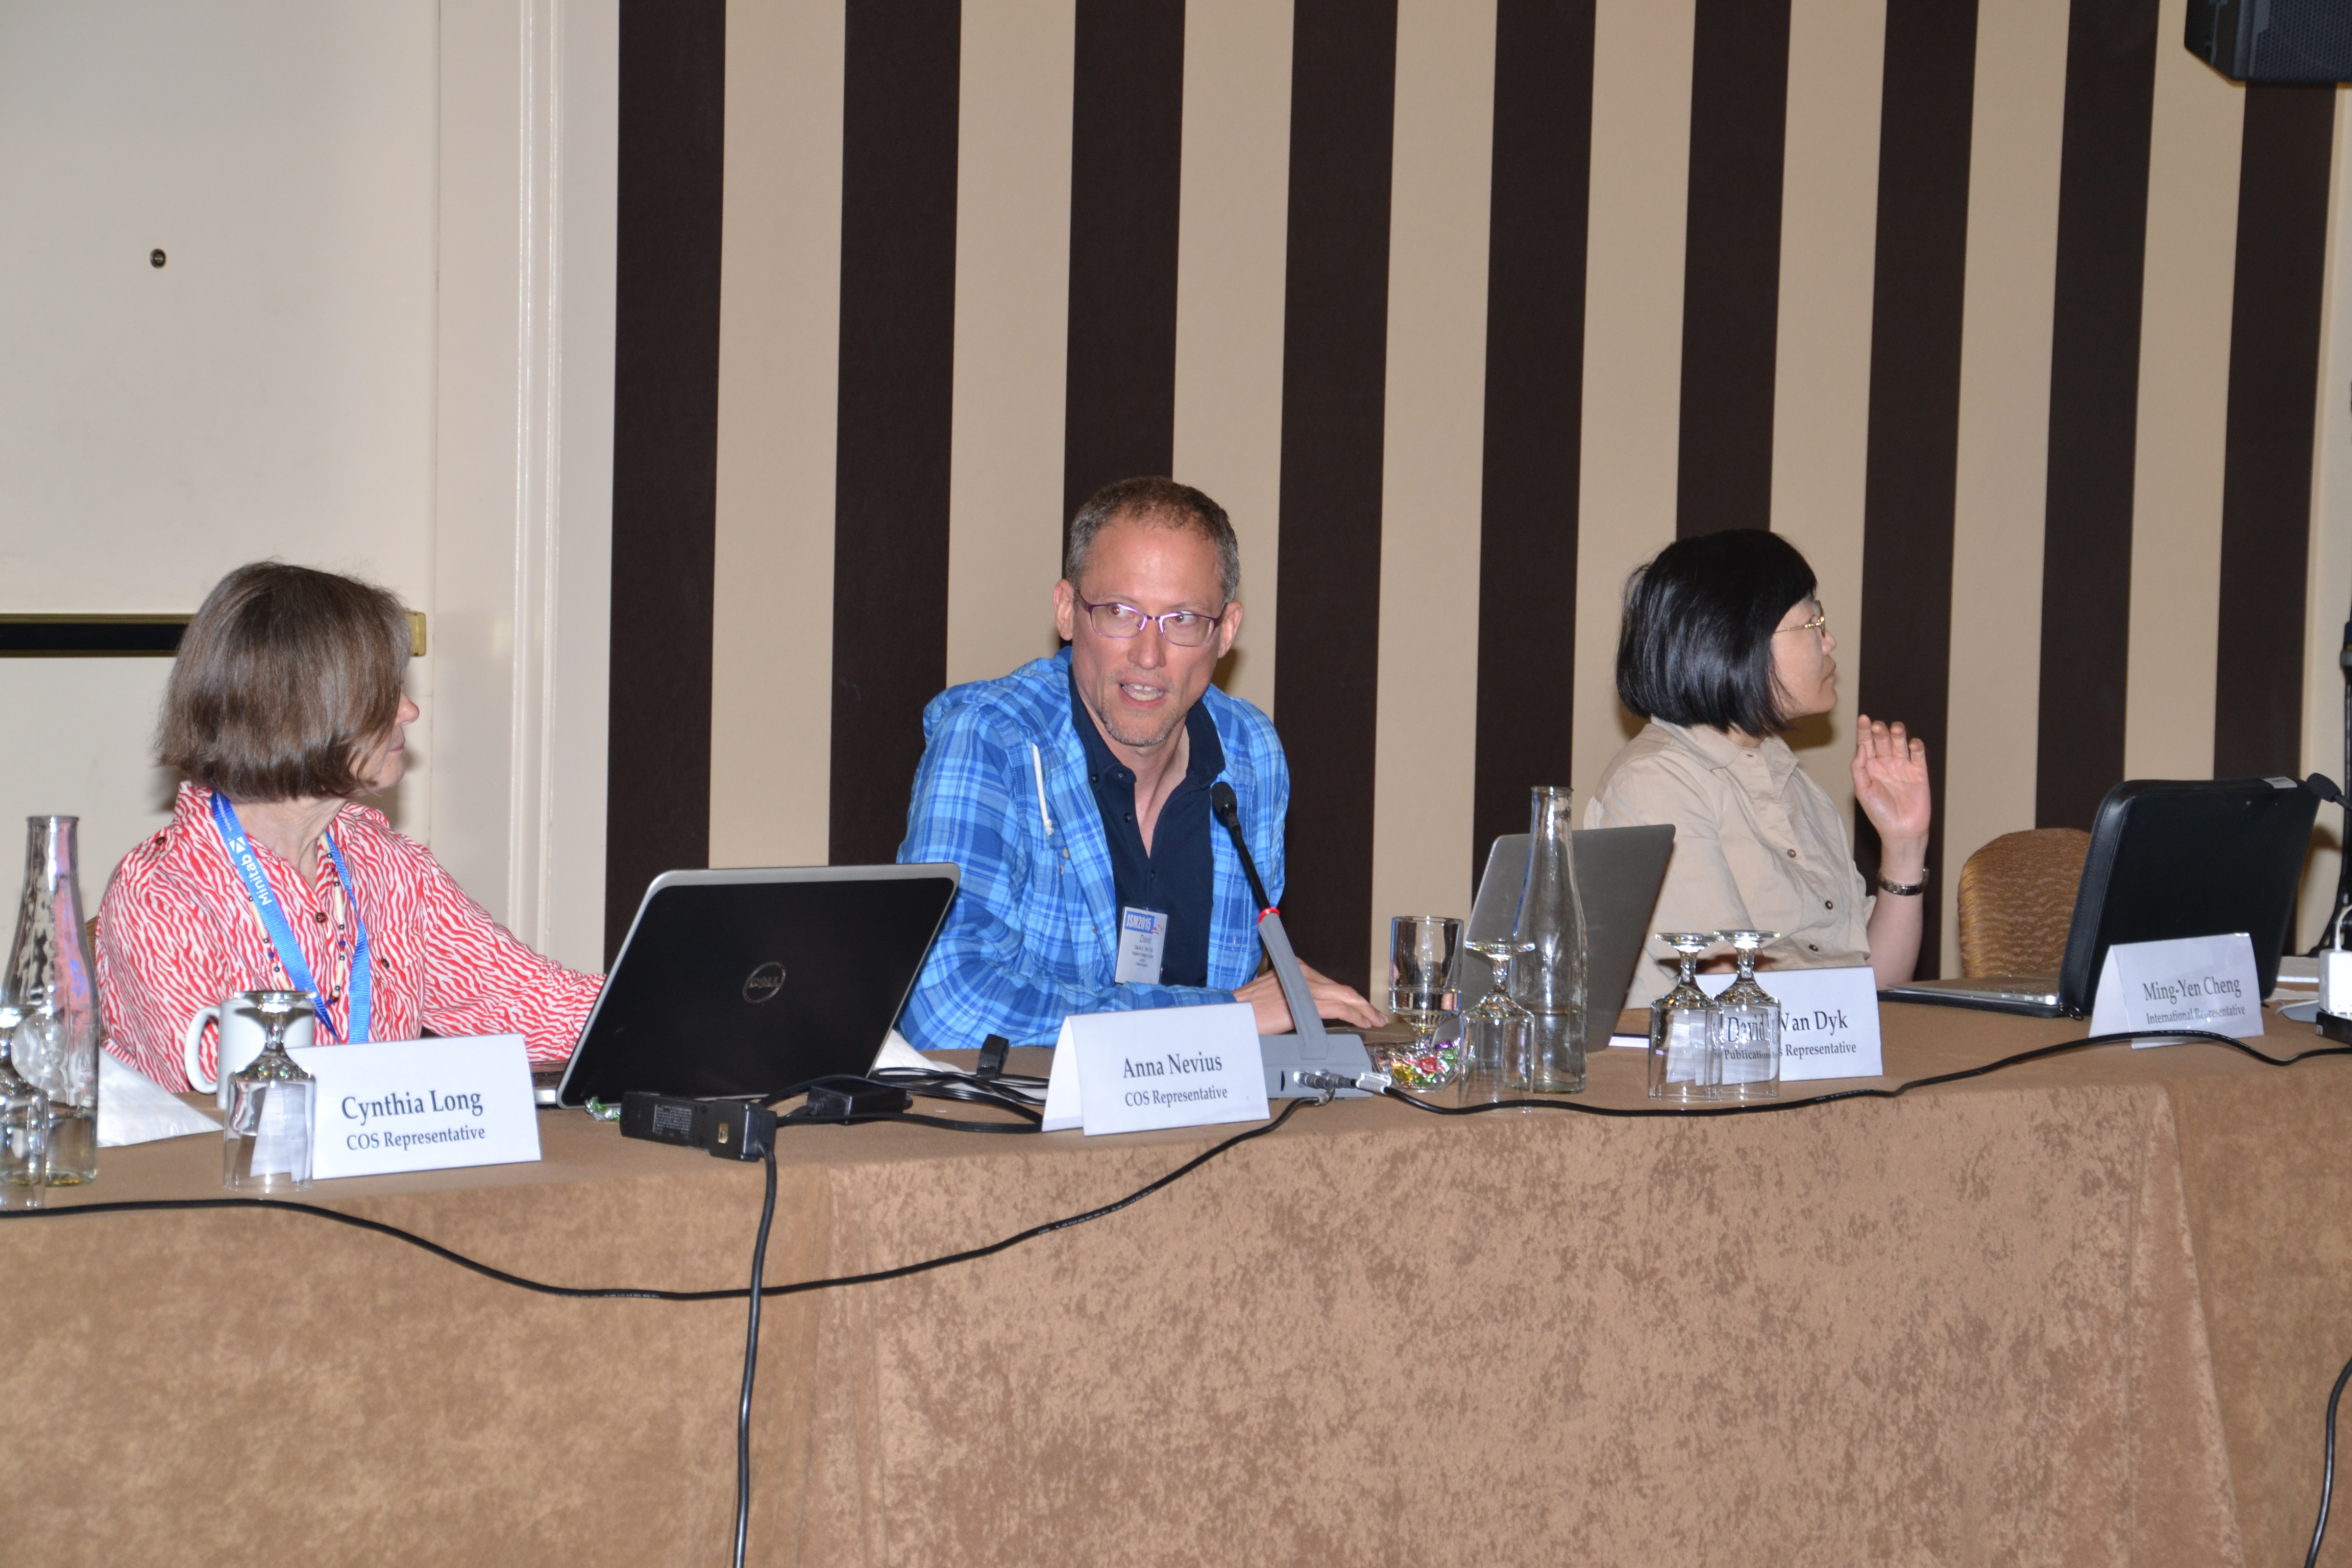 Anna Nevius, David van Dyk, and Ming-Yen Chung attend the ASA Board meeting. 